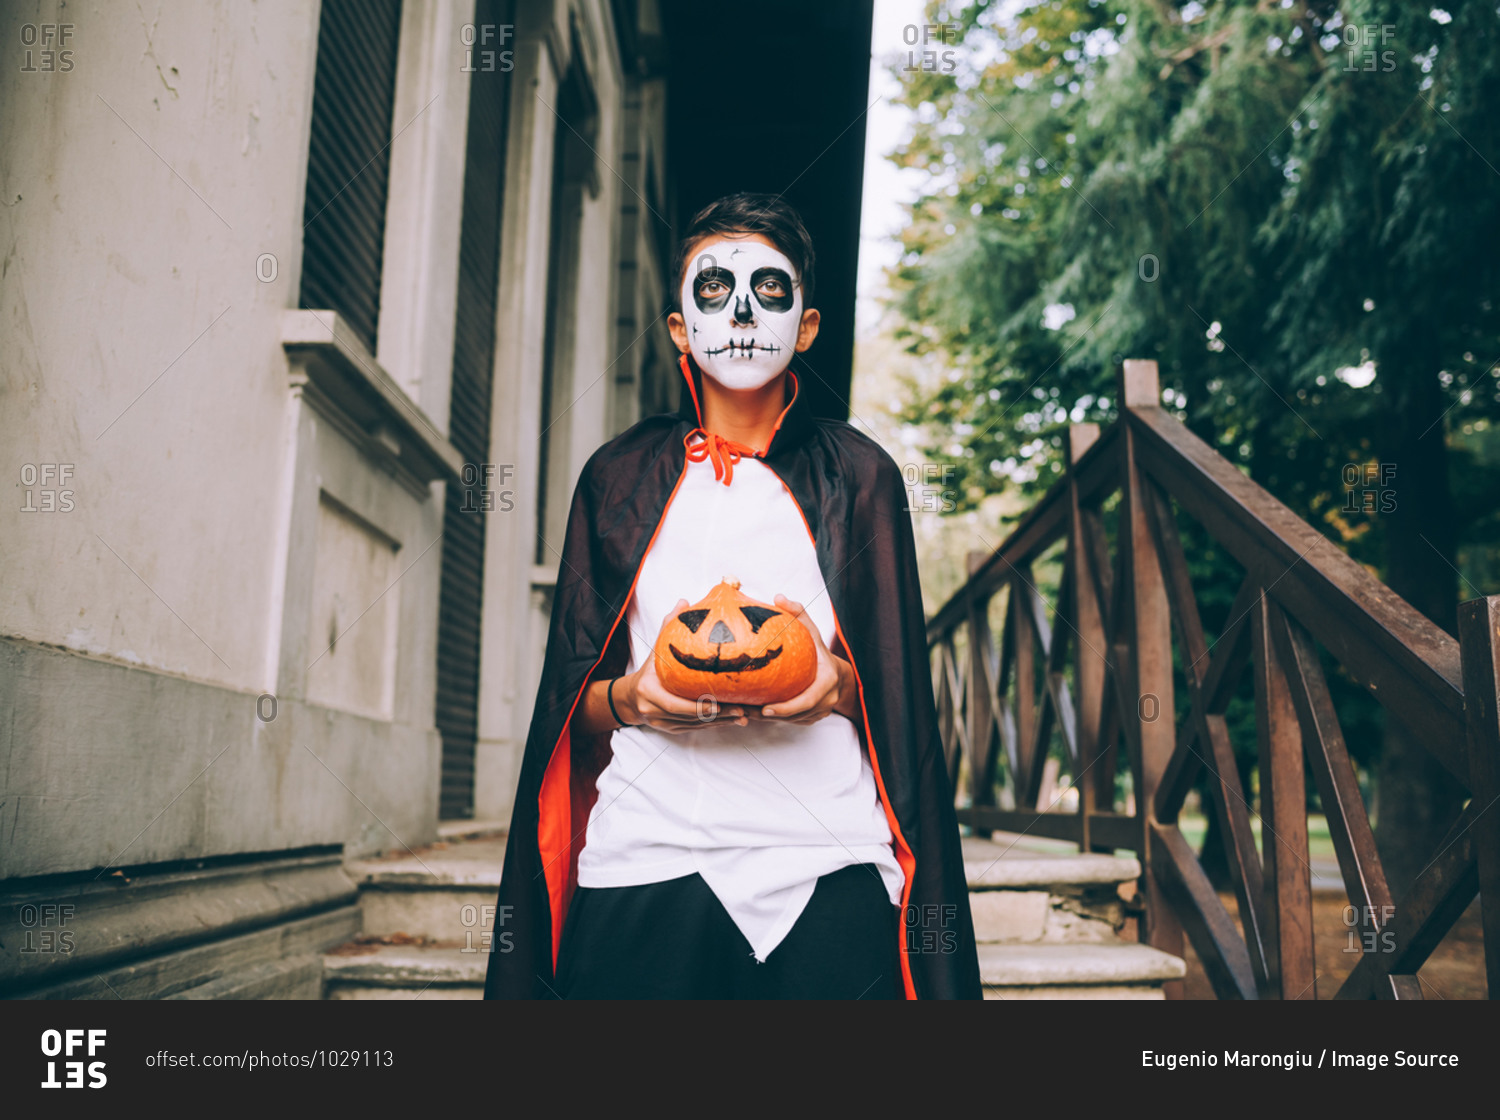 Boy in Halloween costume, holding Jack-O-Lantern